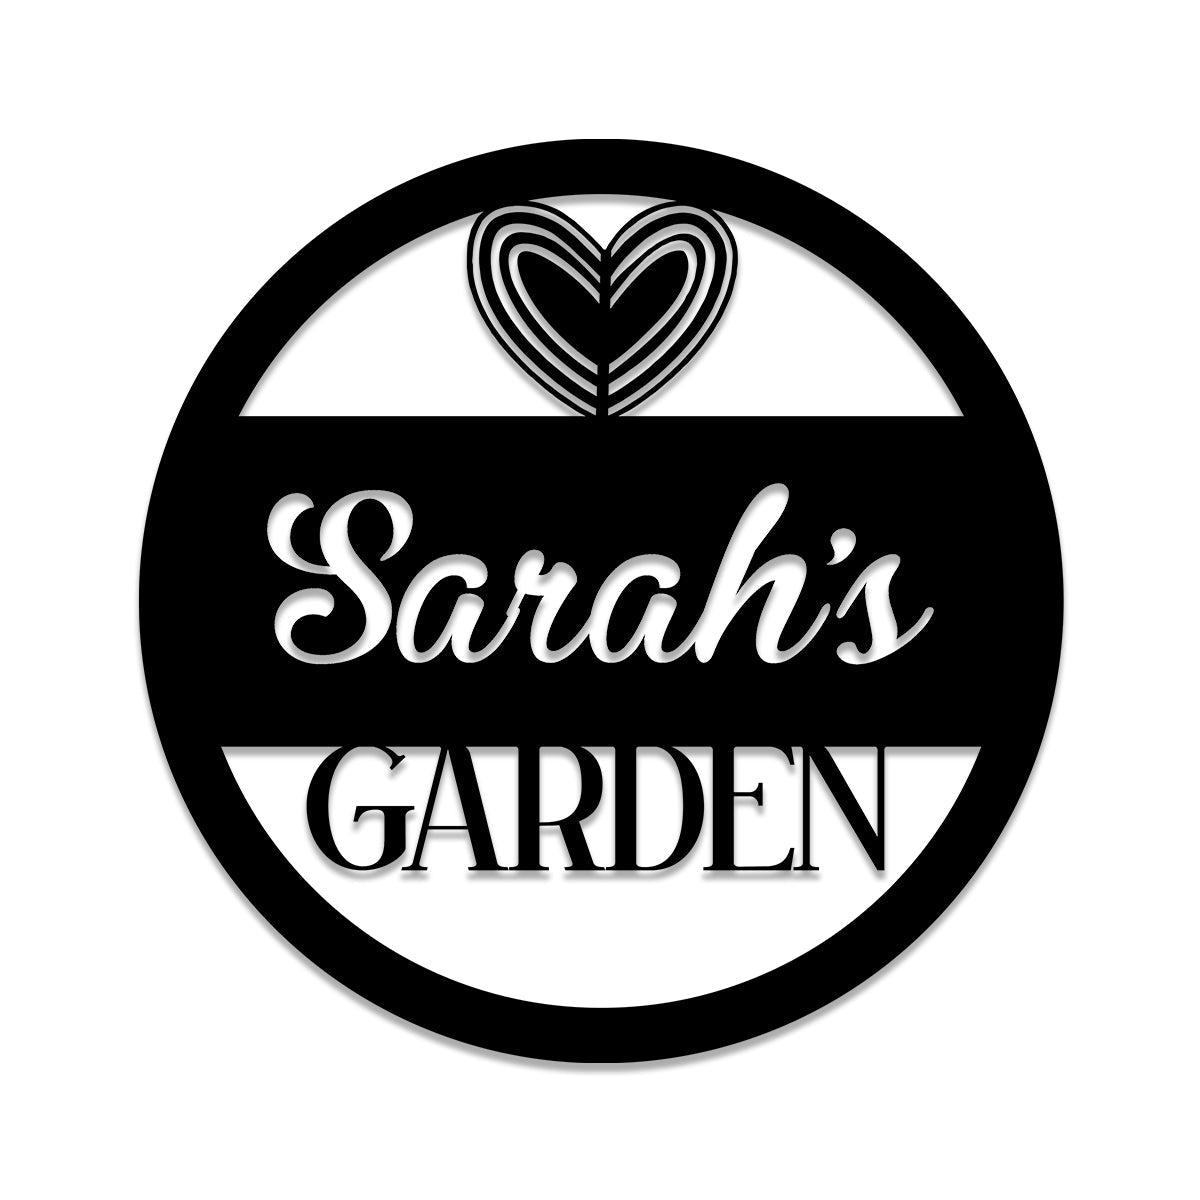 Metal Garden Sign, Custom Outdoor Garden Stake, Home Decor, Wedding, Anniversary Art Gift For Gardening Lovers